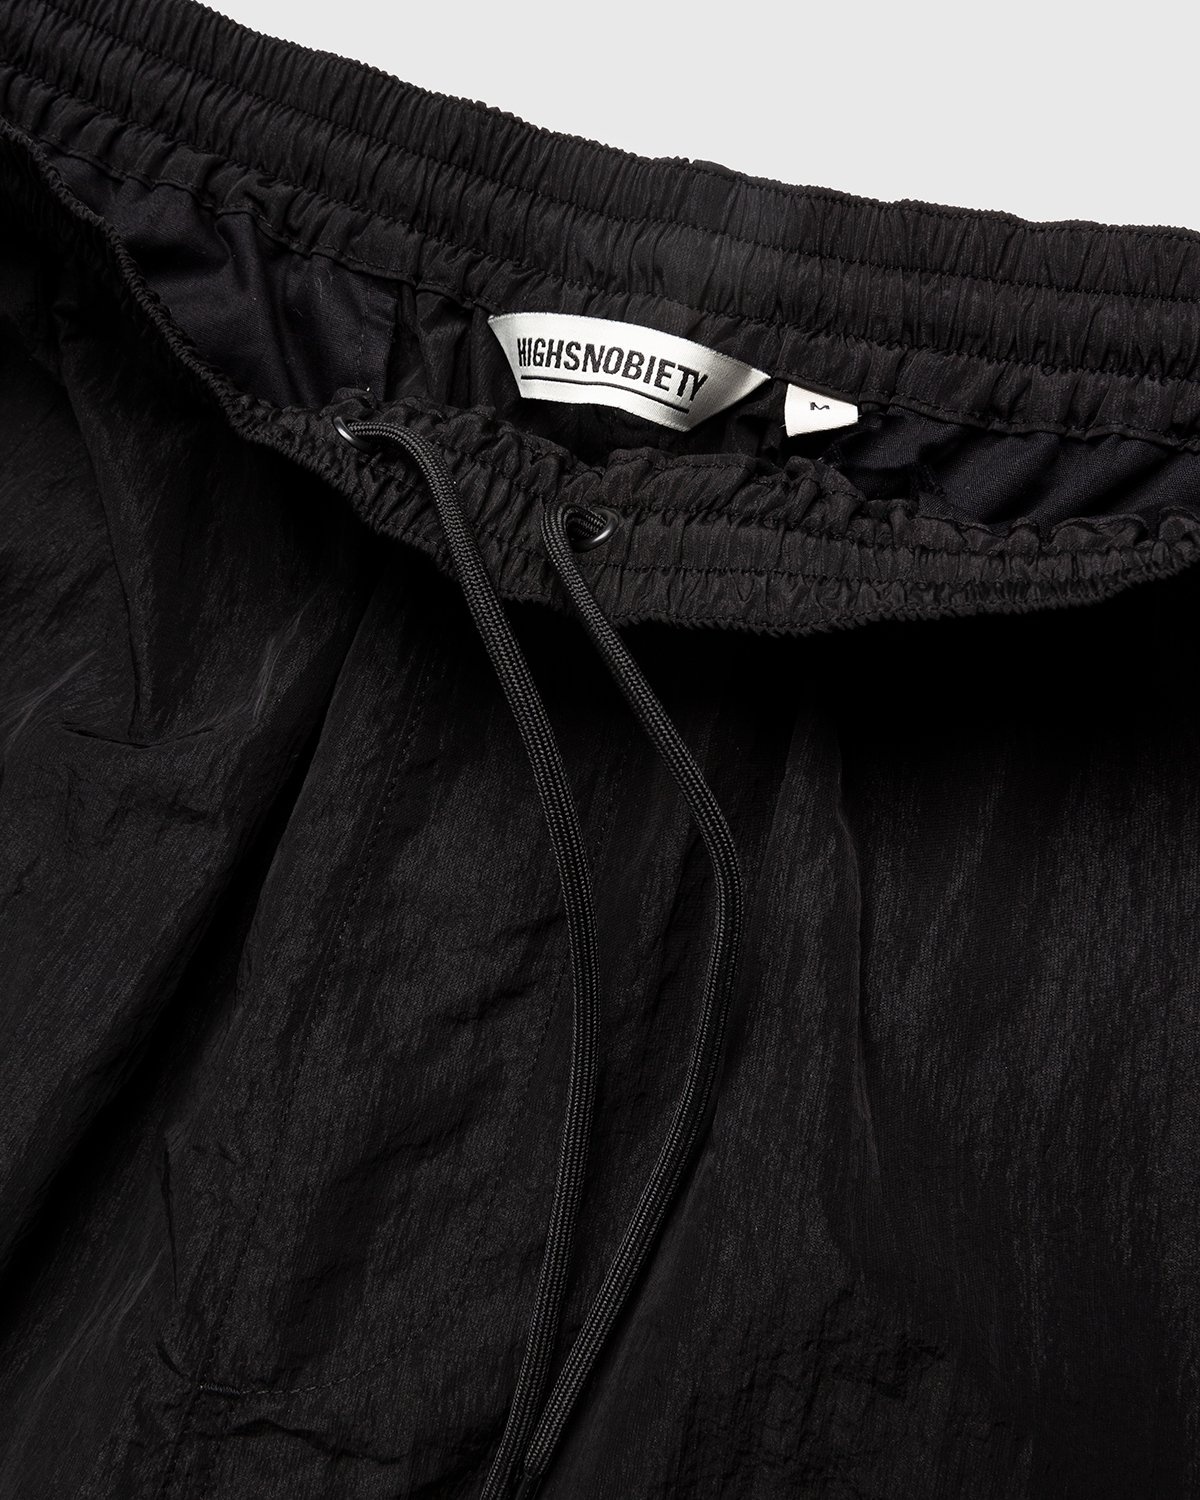 Highsnobiety – Crepe Nylon Elastic Pants Black - Active Pants - Black - Image 5